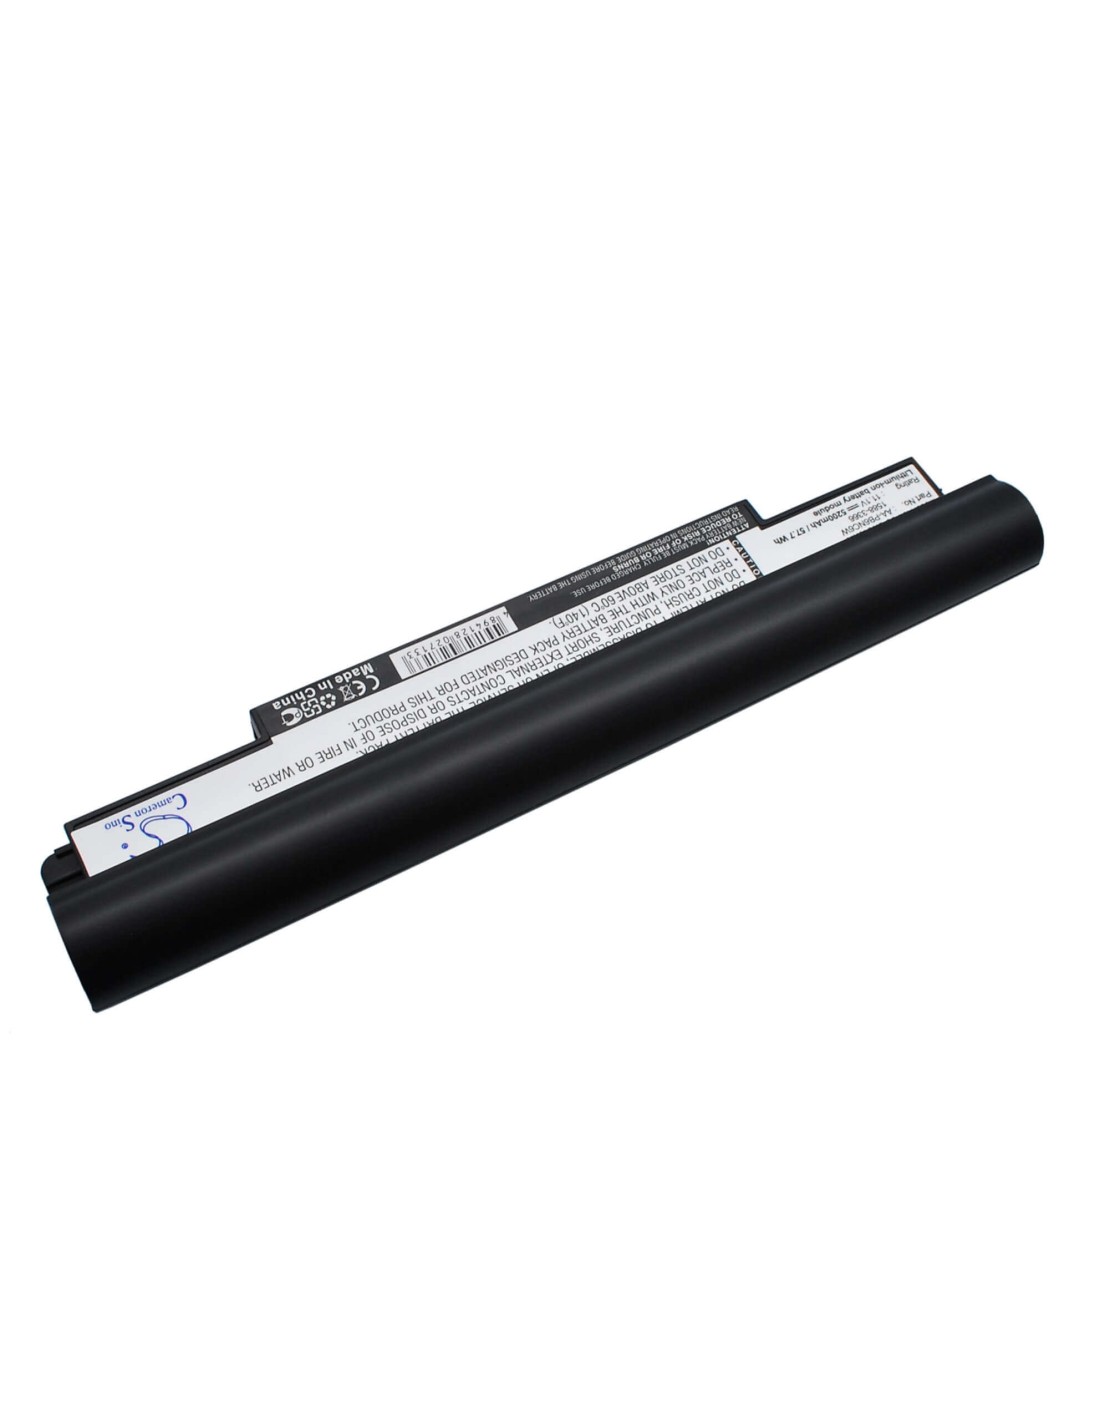 Black Battery for Samsung Np-nc10, Np-nc10-ka03cn, Np-nc10-ka02uk 11.1V, 5200mAh - 57.72Wh